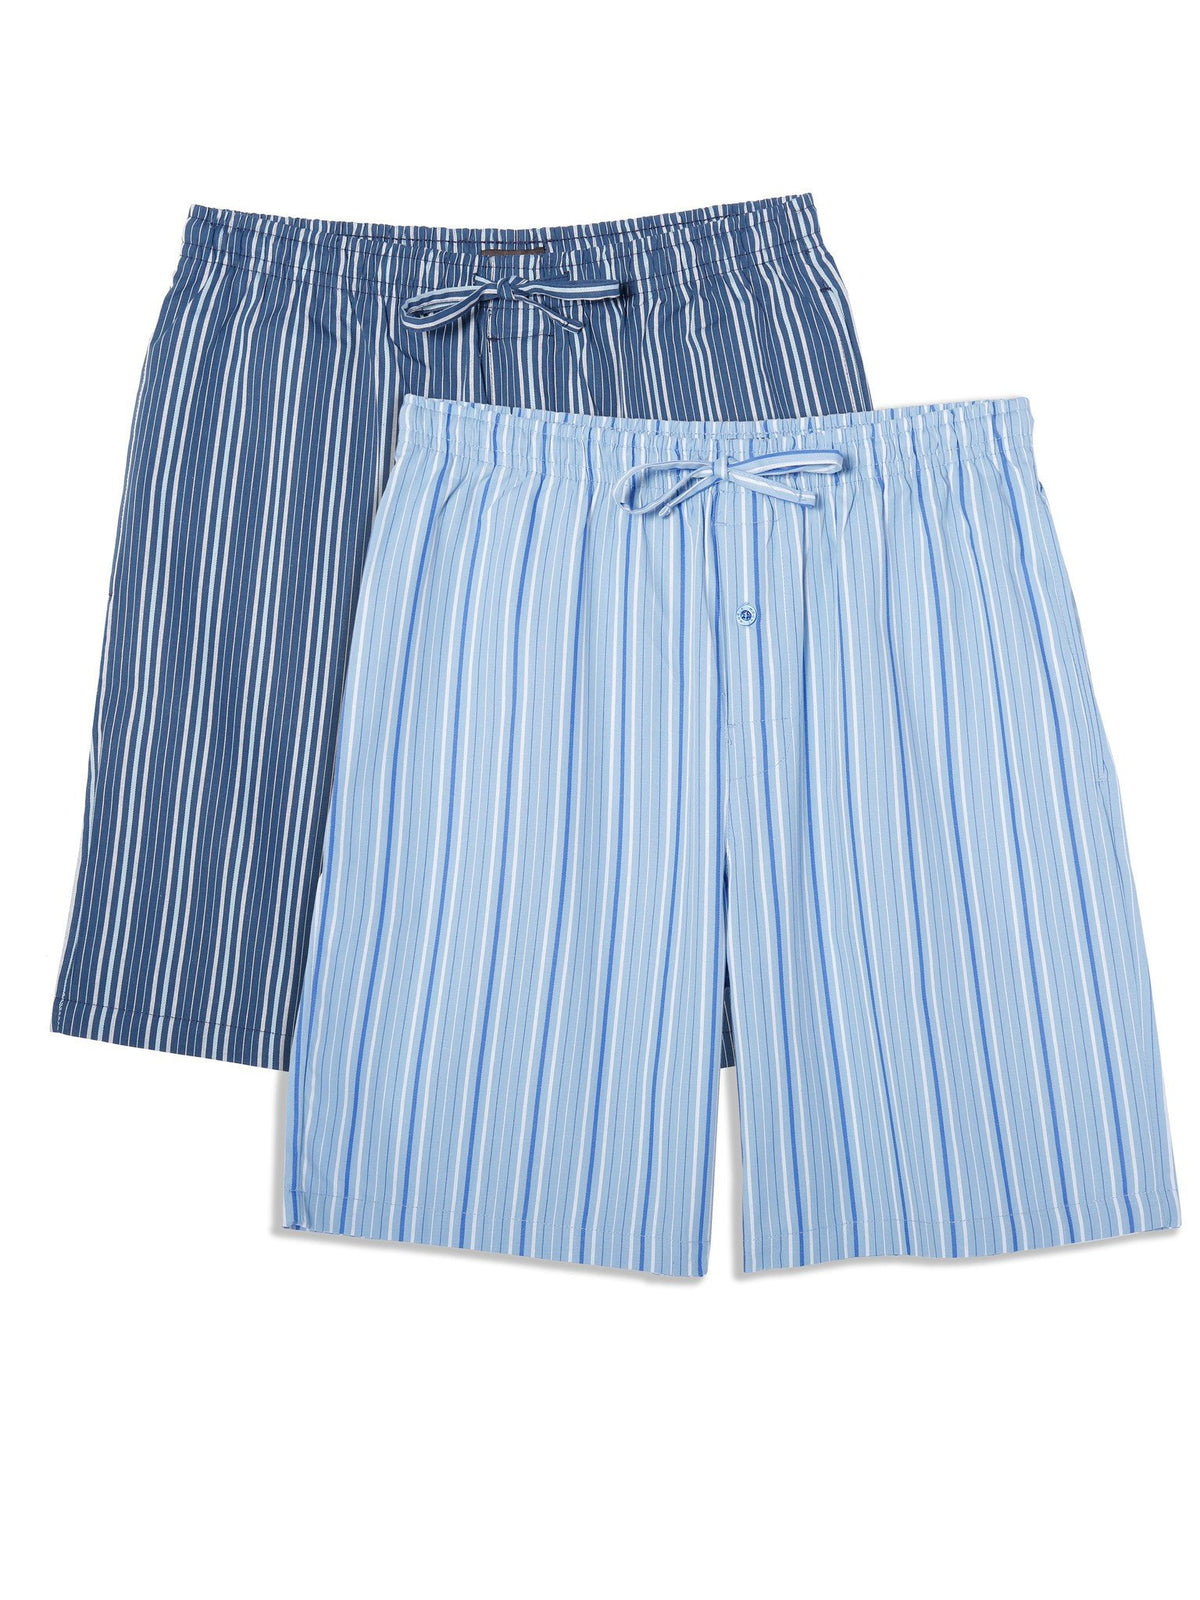 Men's Premium Cotton Sleep Shorts (2-Pack) - Stripes Blue Pack